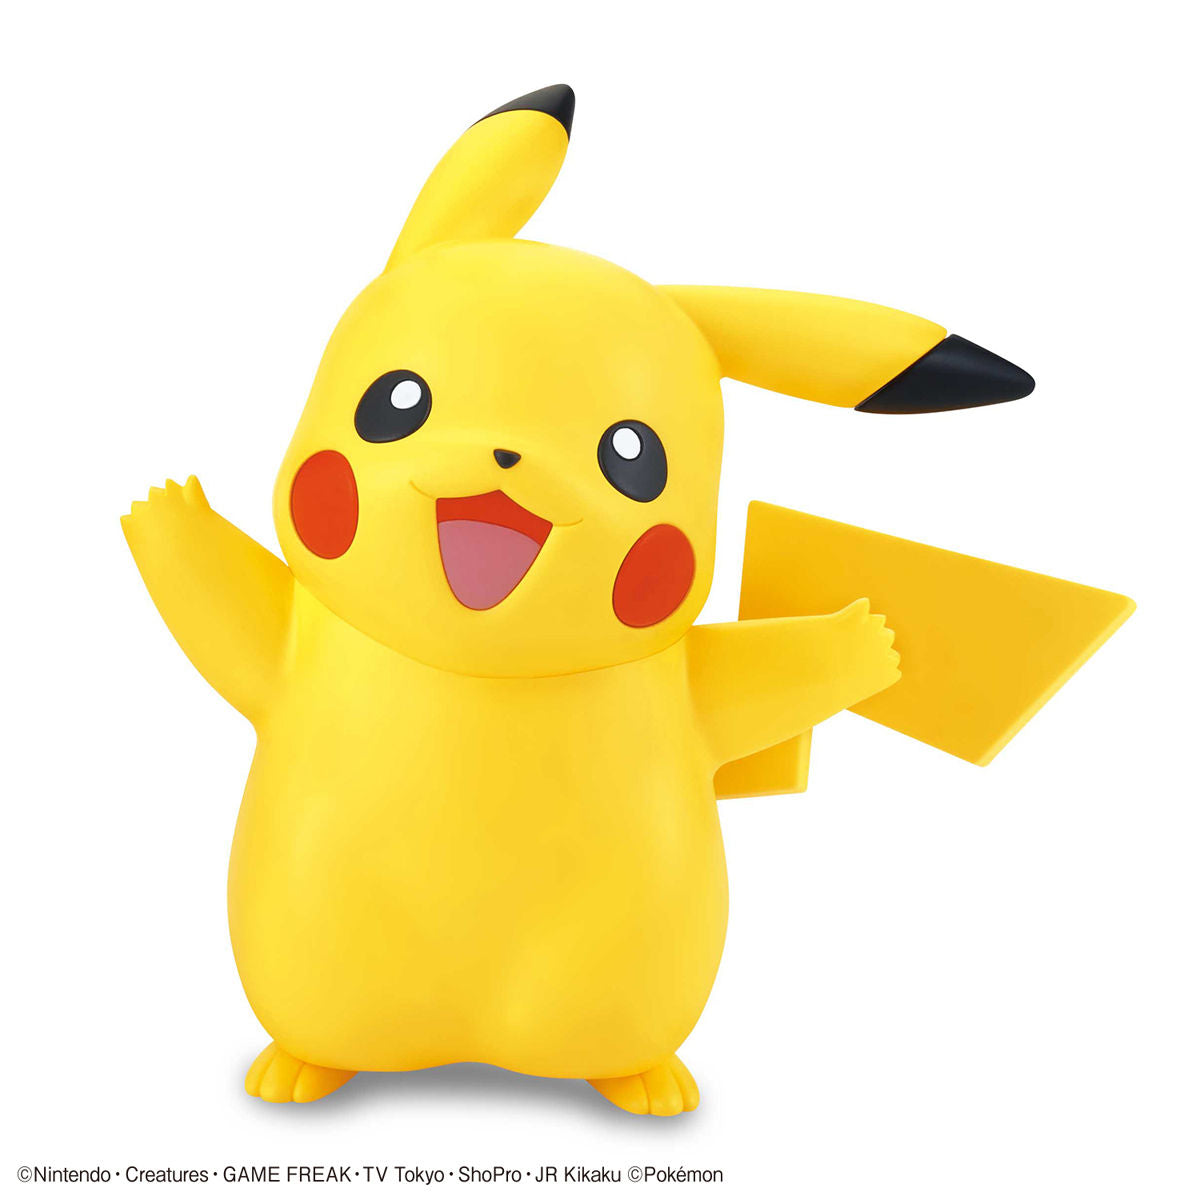 Pokemon - Plastic Model Collection Quick!! : 01 Pikachu